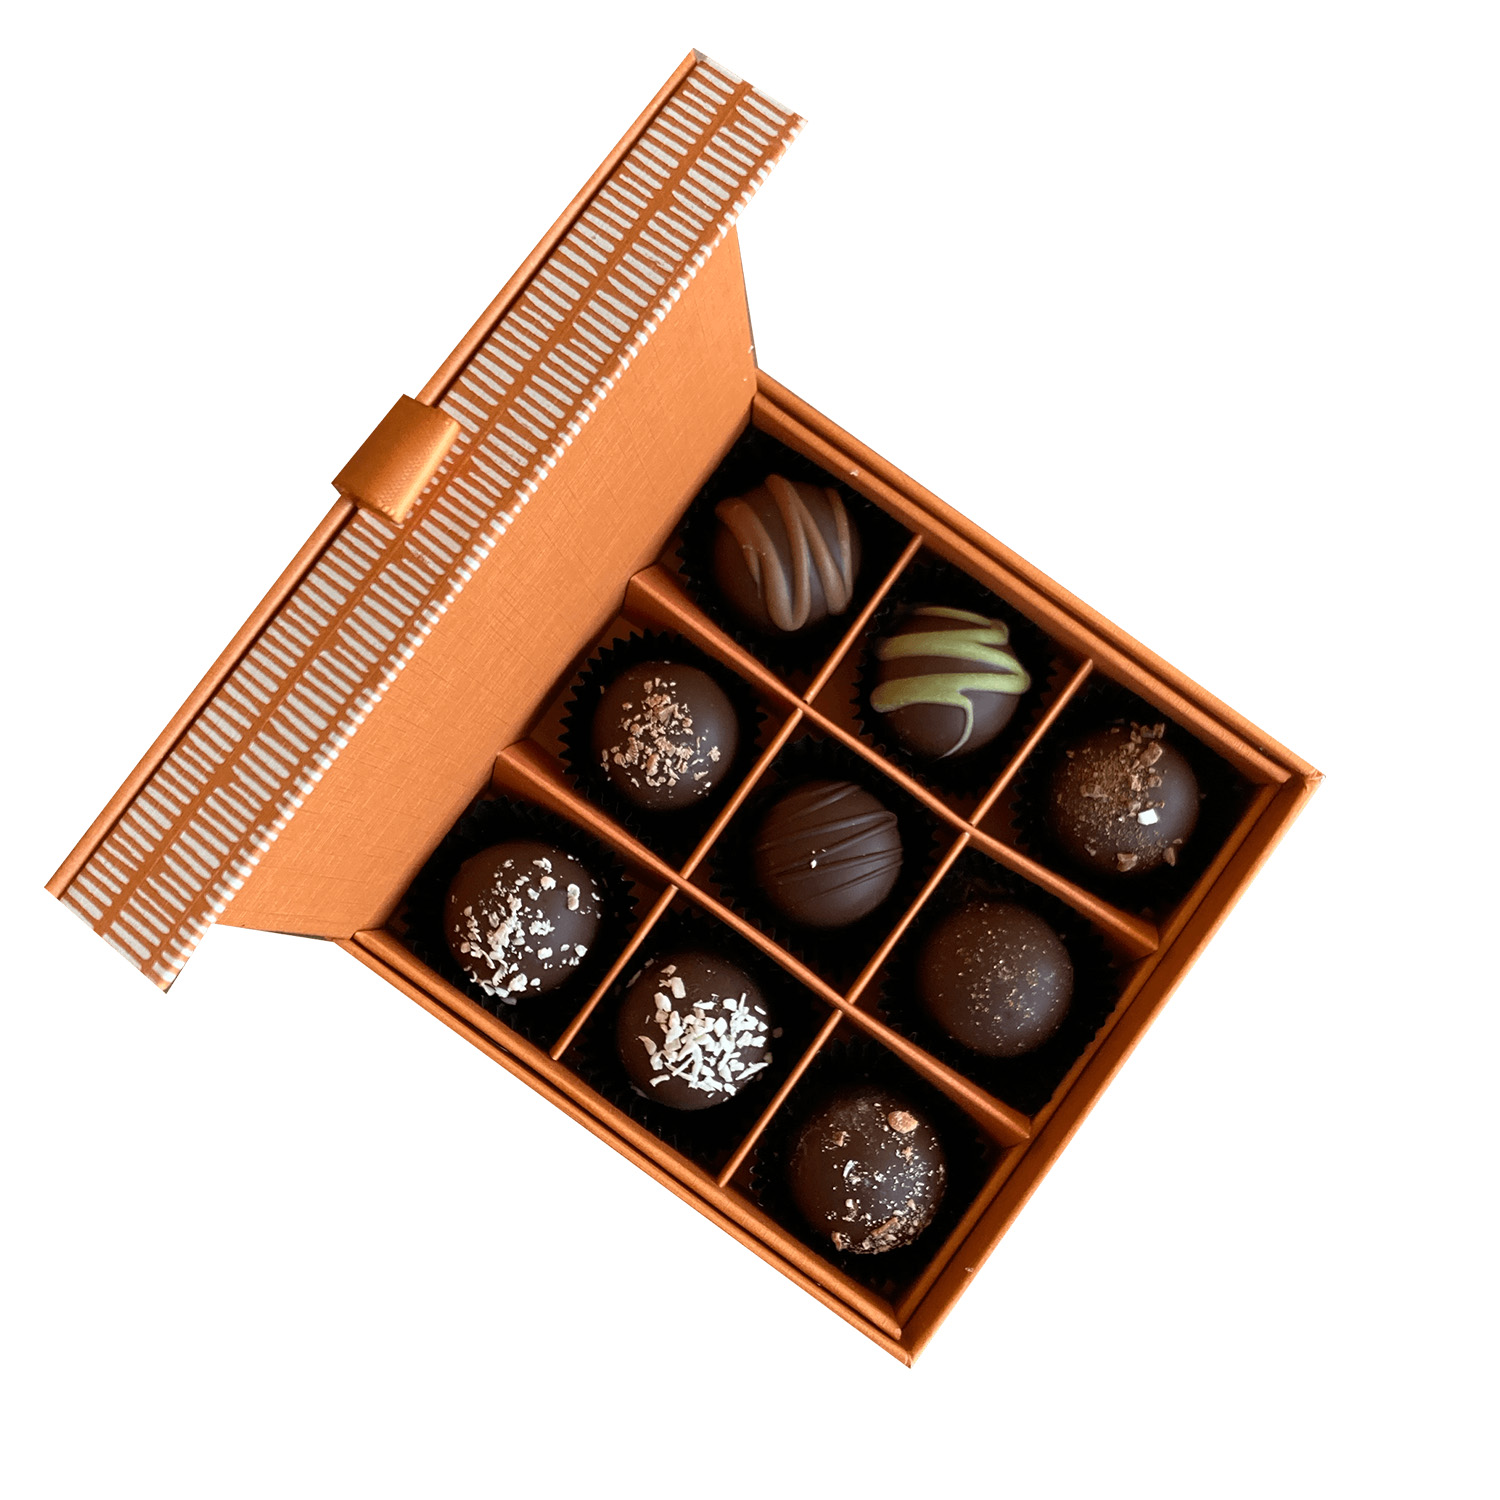 Sjaak's chocolate in box